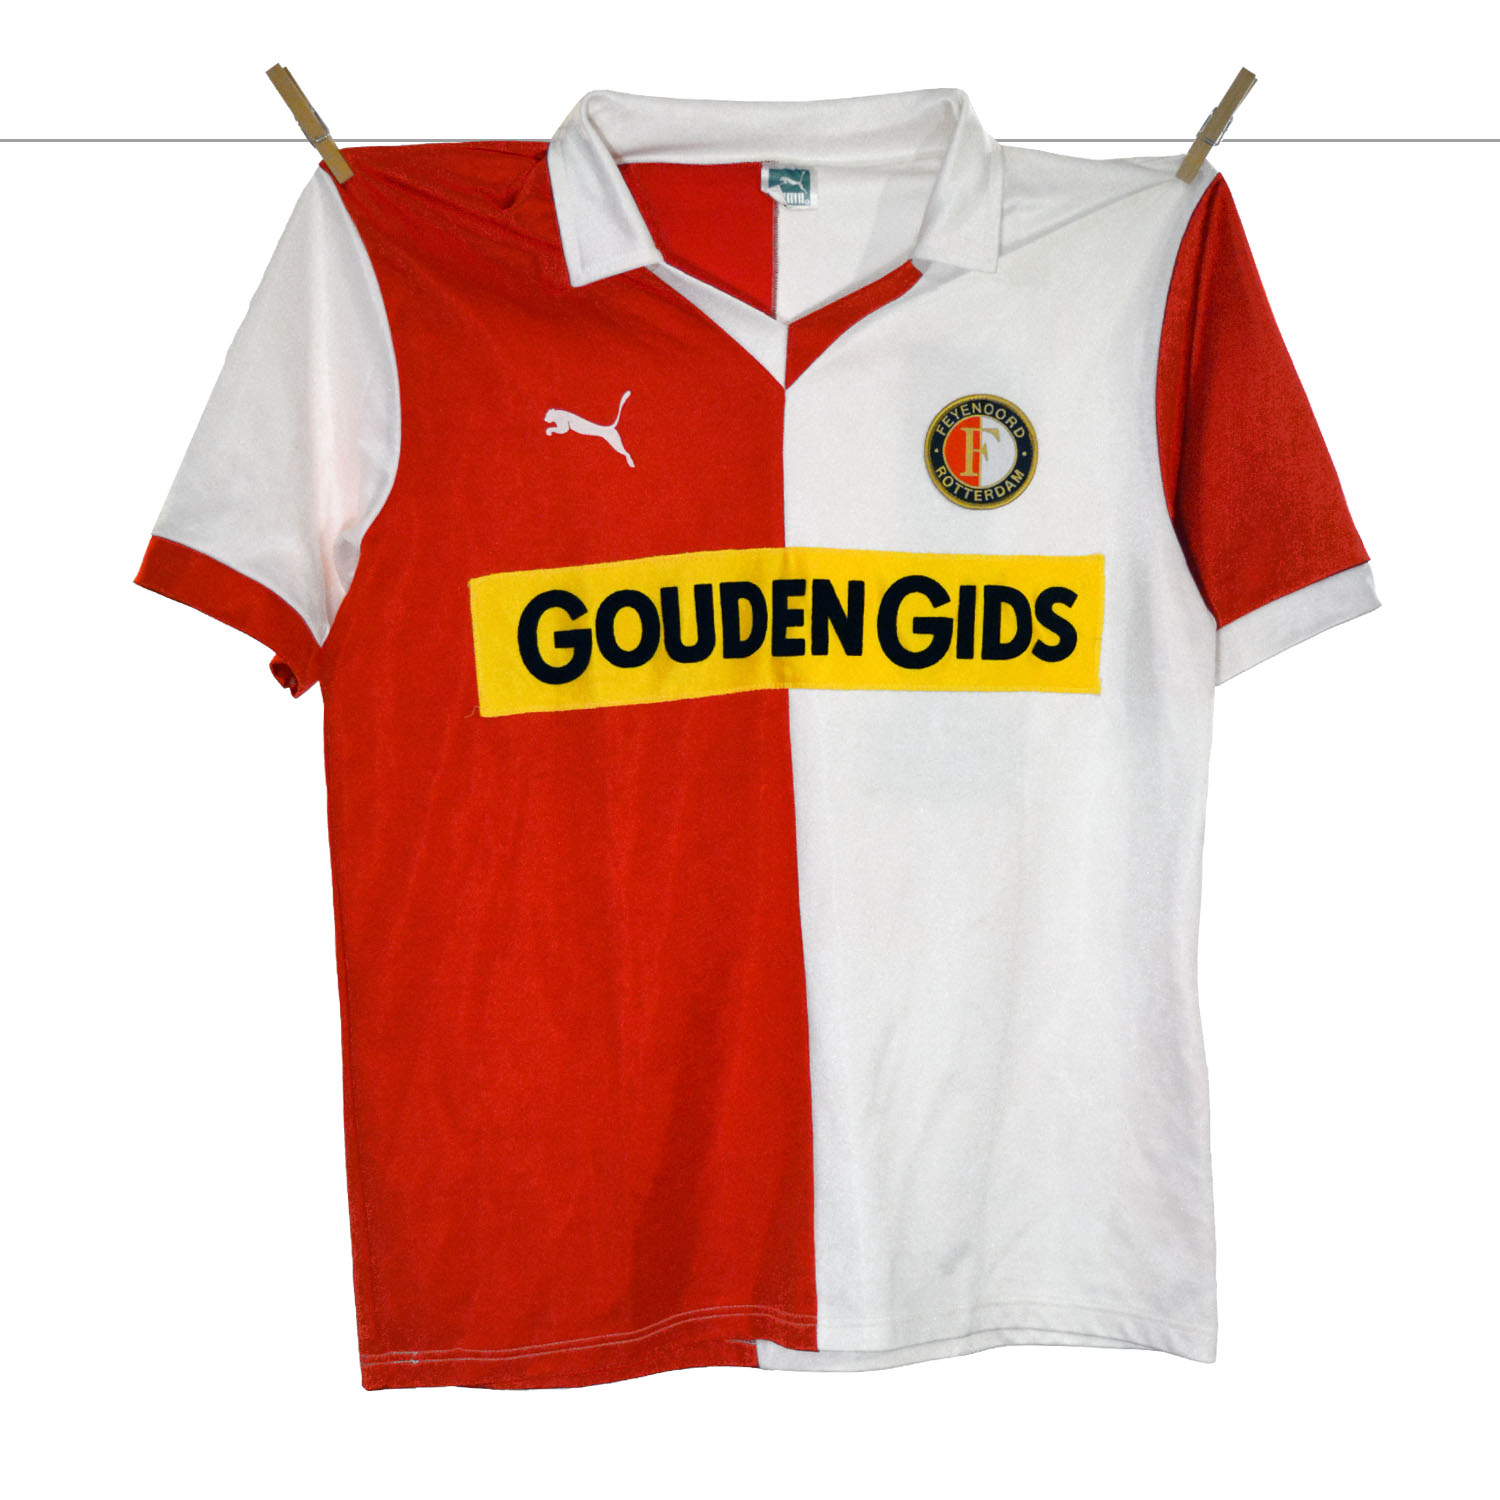 Ochtend gymnastiek Vanaf daar hoek 1982 – 1983, Nr. 19 – The Feyenoord Matchworn Shirt Collection